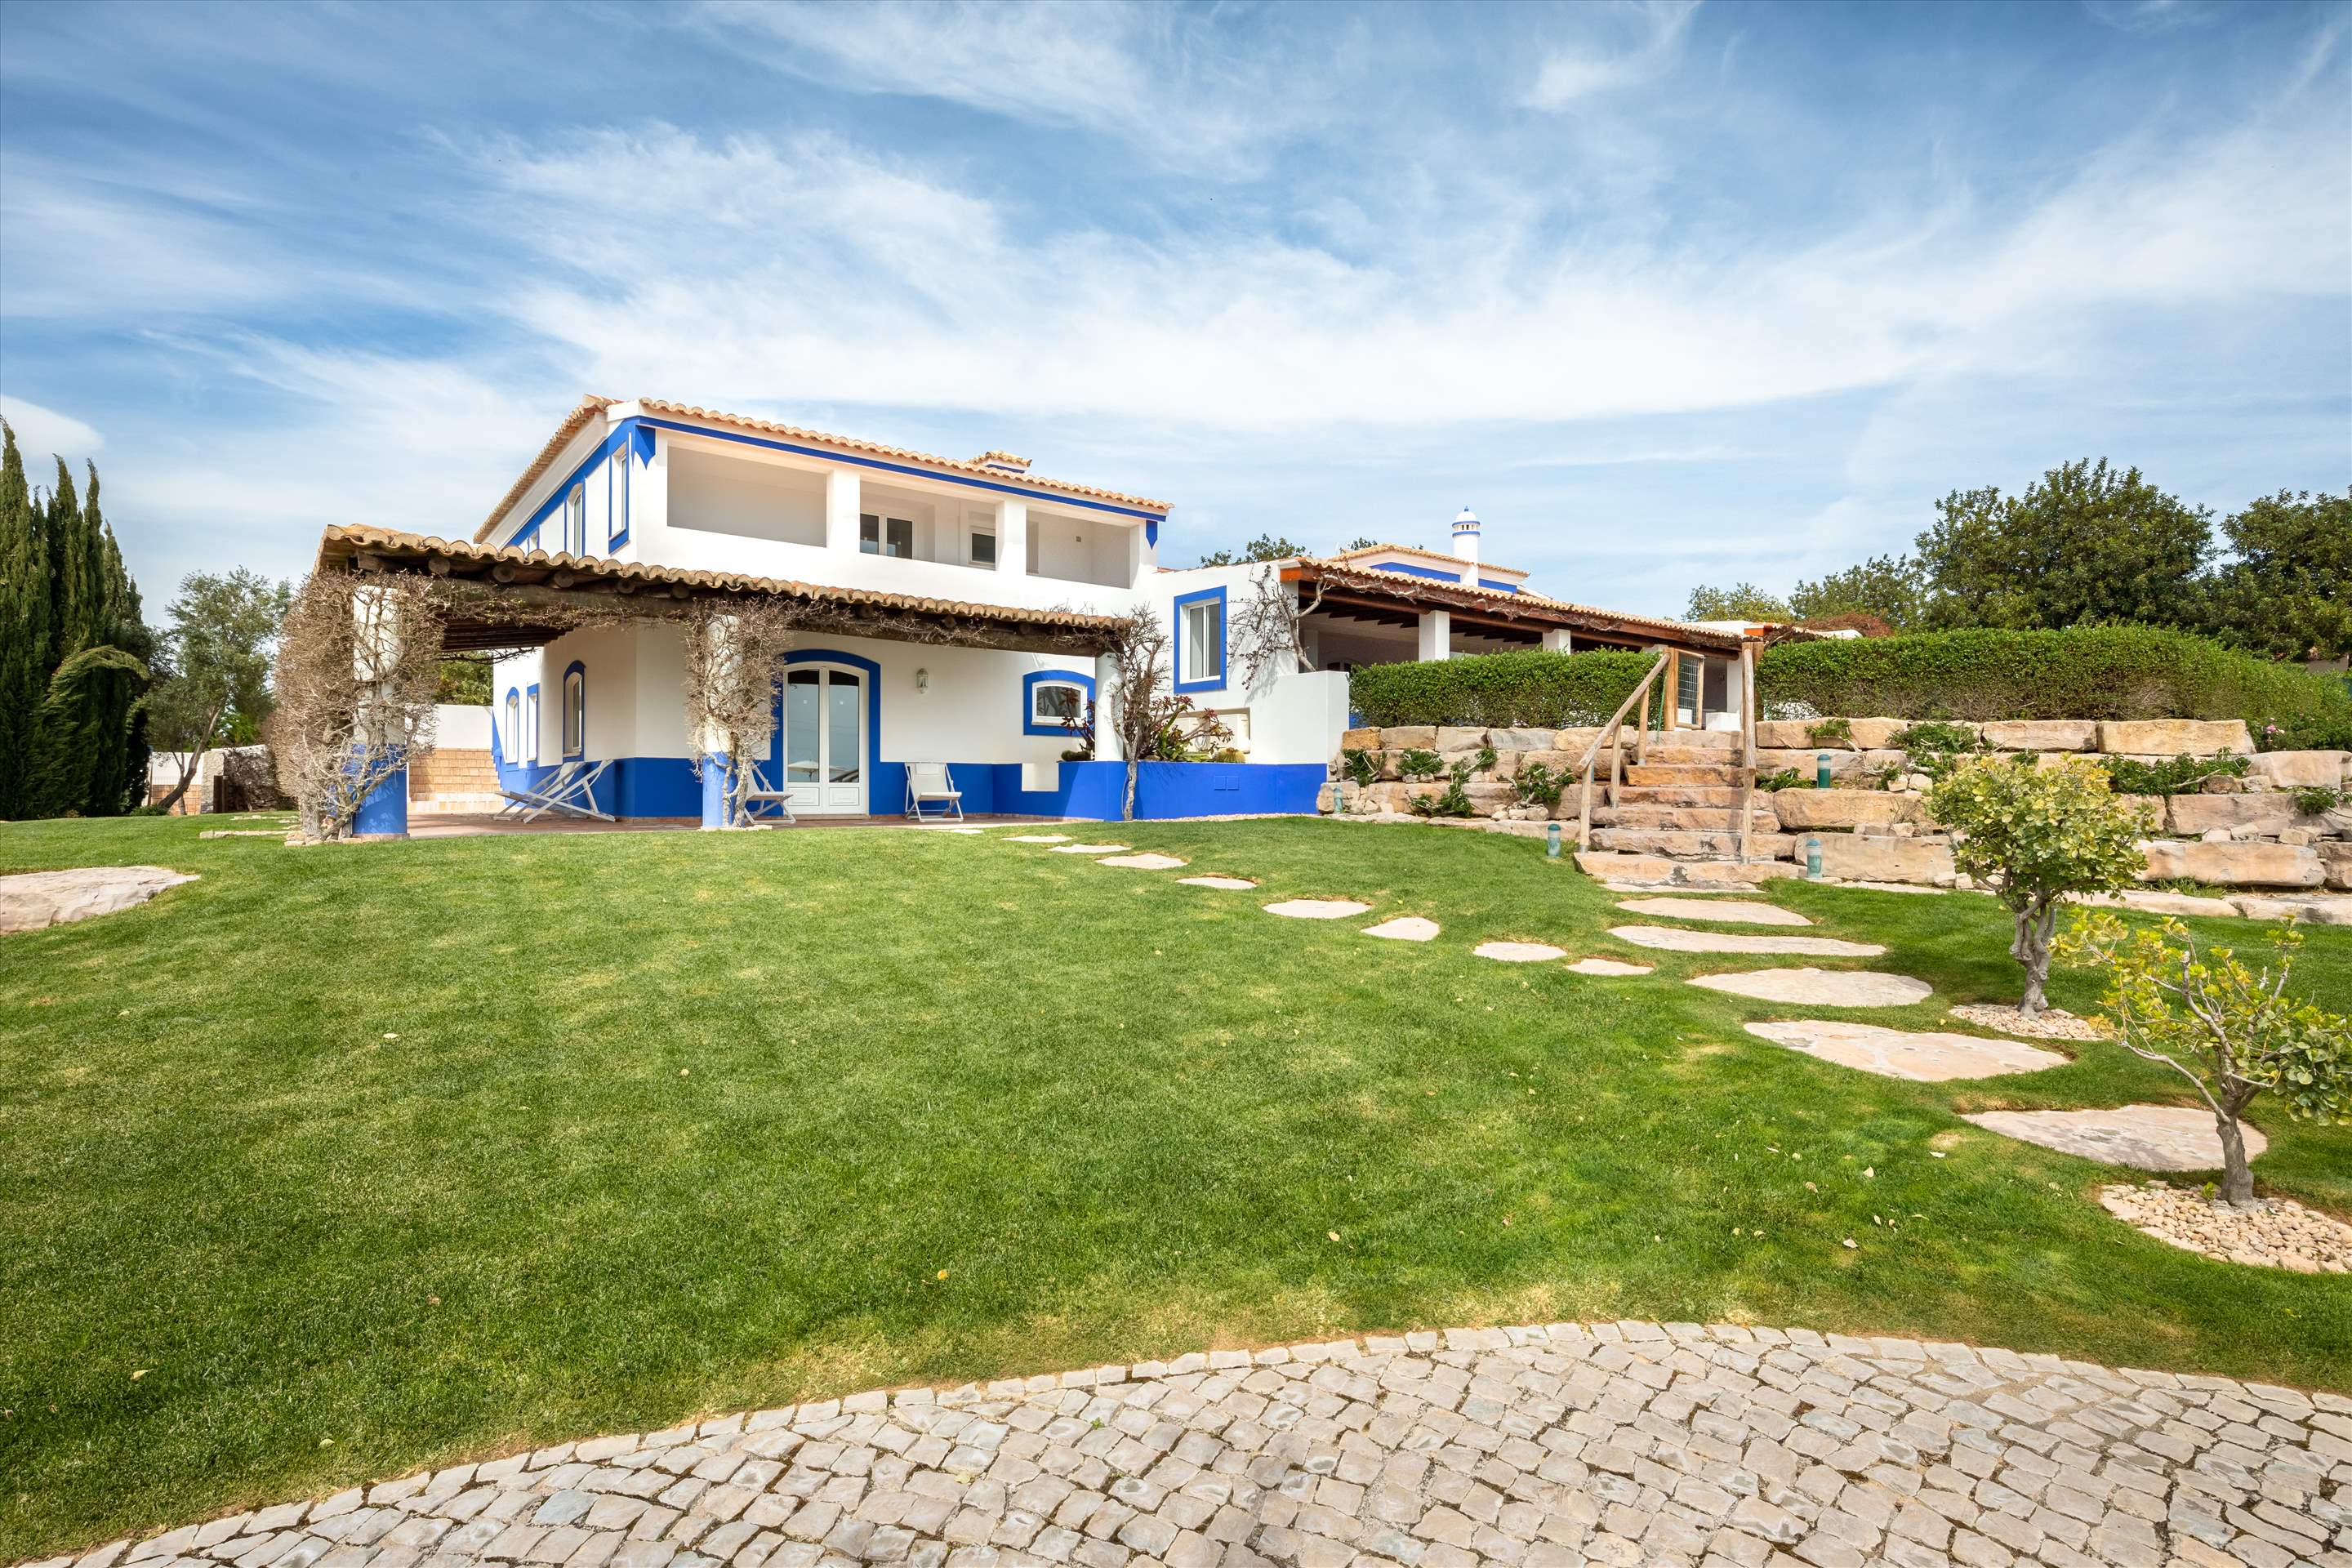 Casa da Montanha, 13-14 persons, 8 bedroom villa in Vilamoura Area, Algarve Photo #5